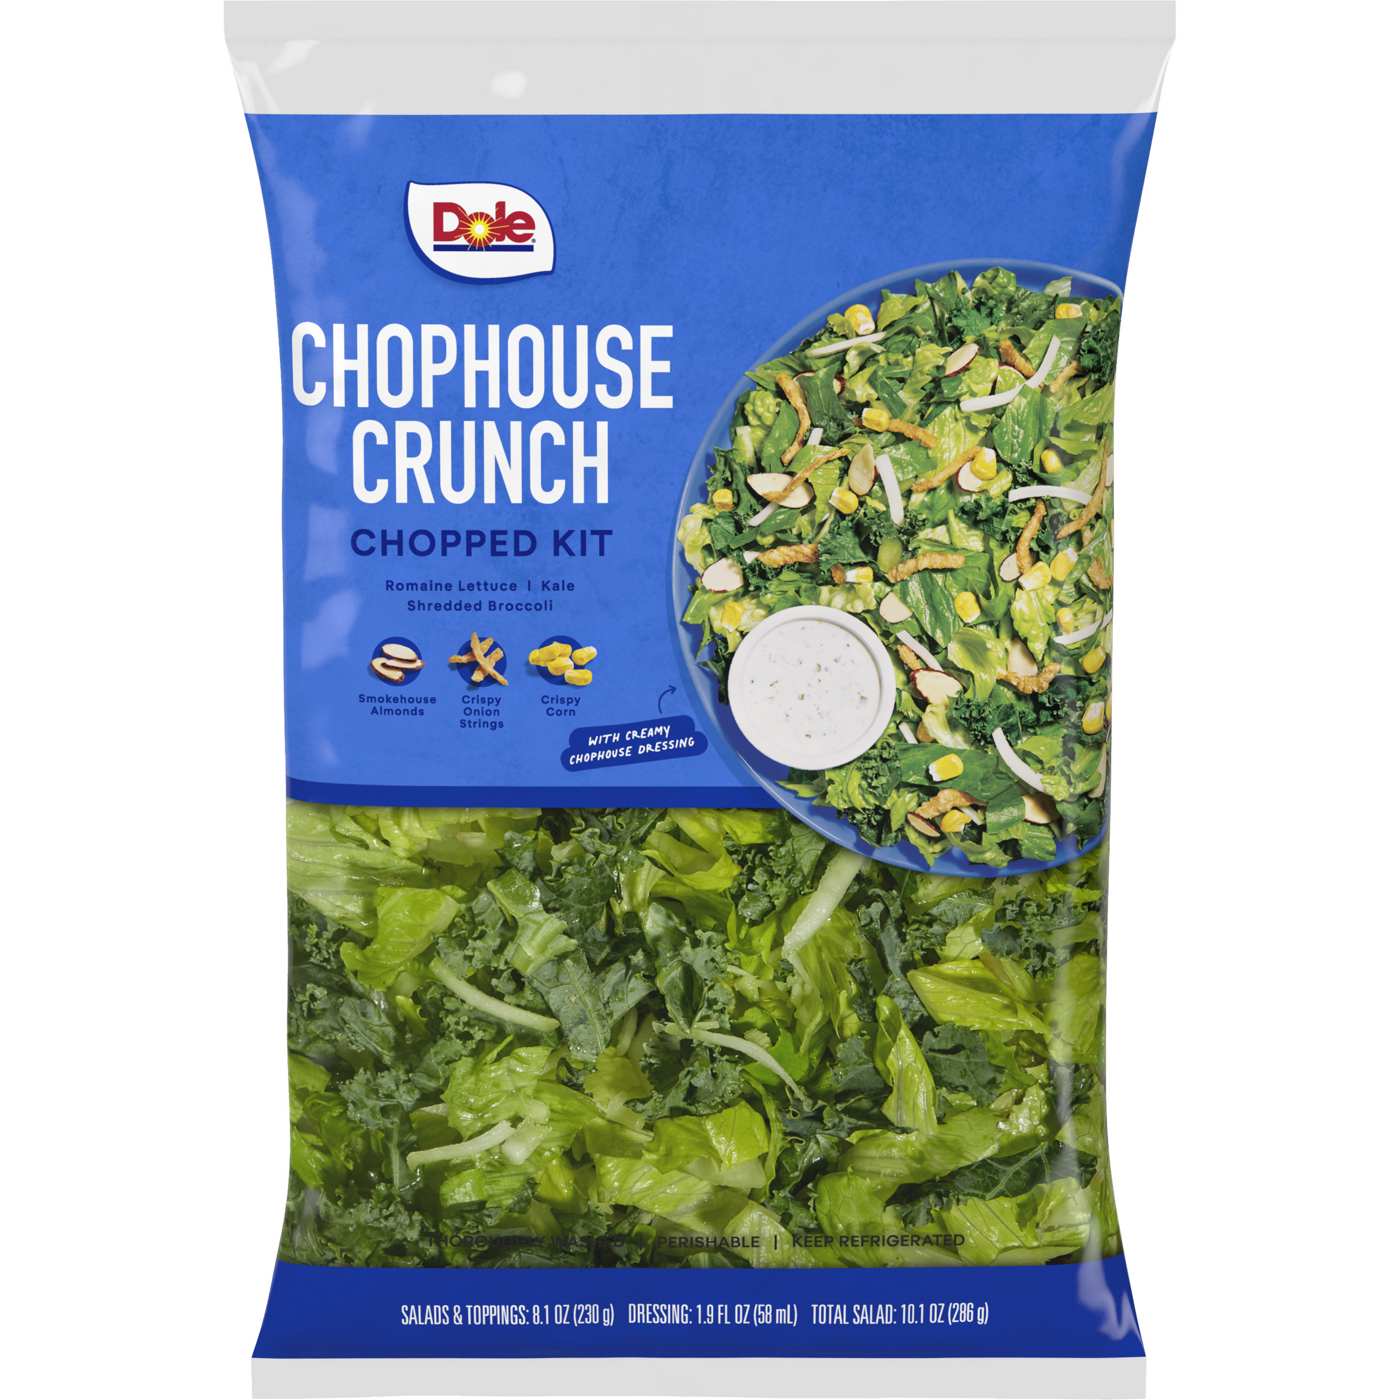 Dole Chopped Salad Kit - Chophouse Crunch; image 1 of 2